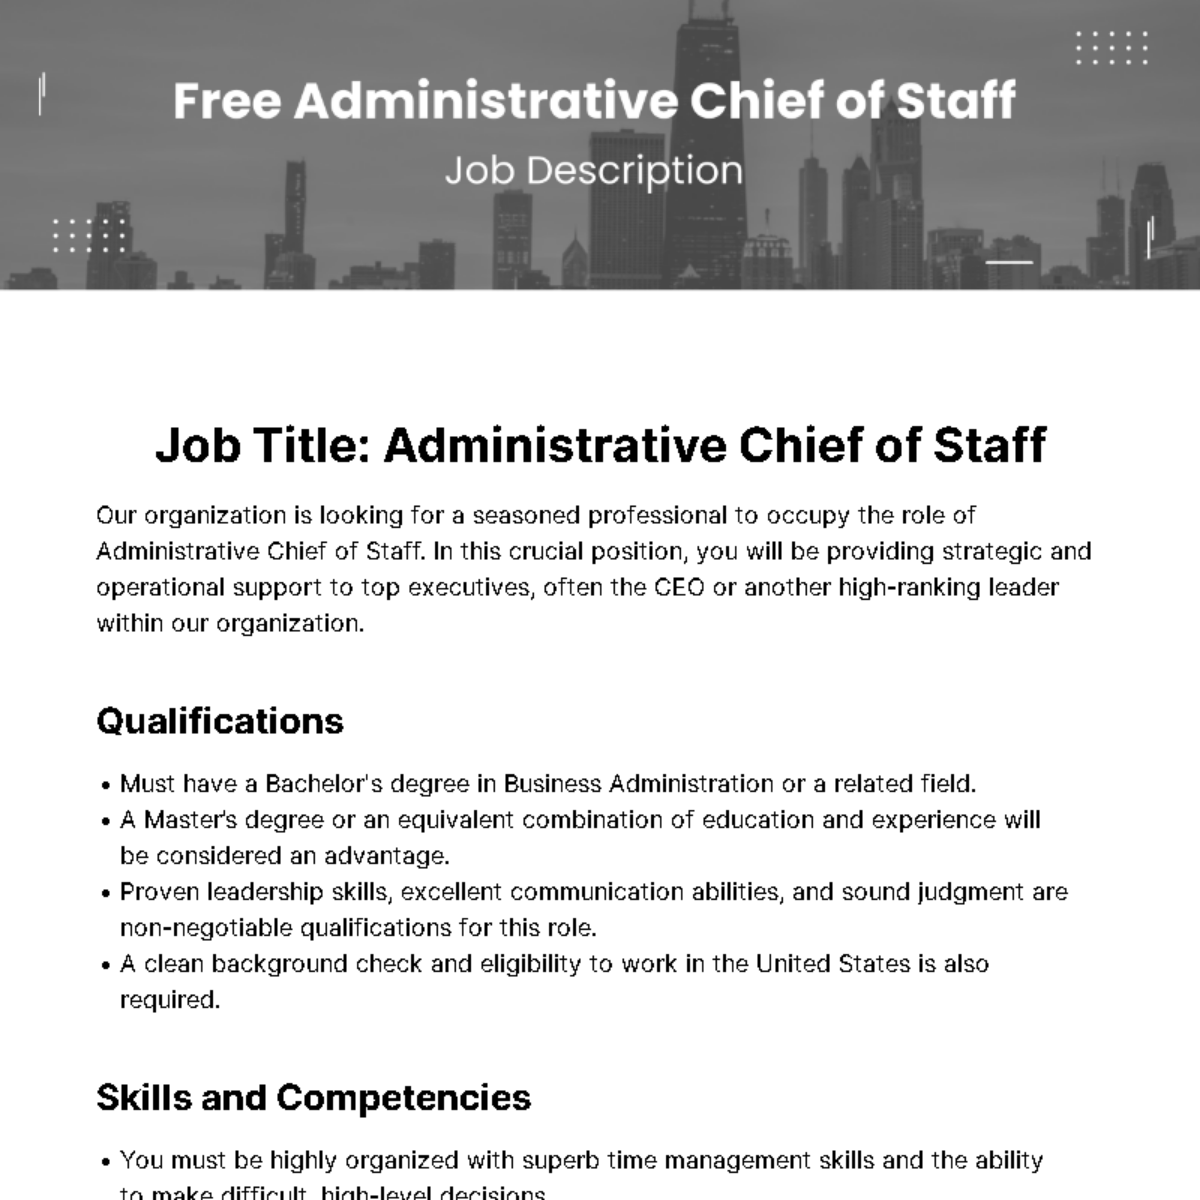 Administrative Chief of Staff Job Description Template